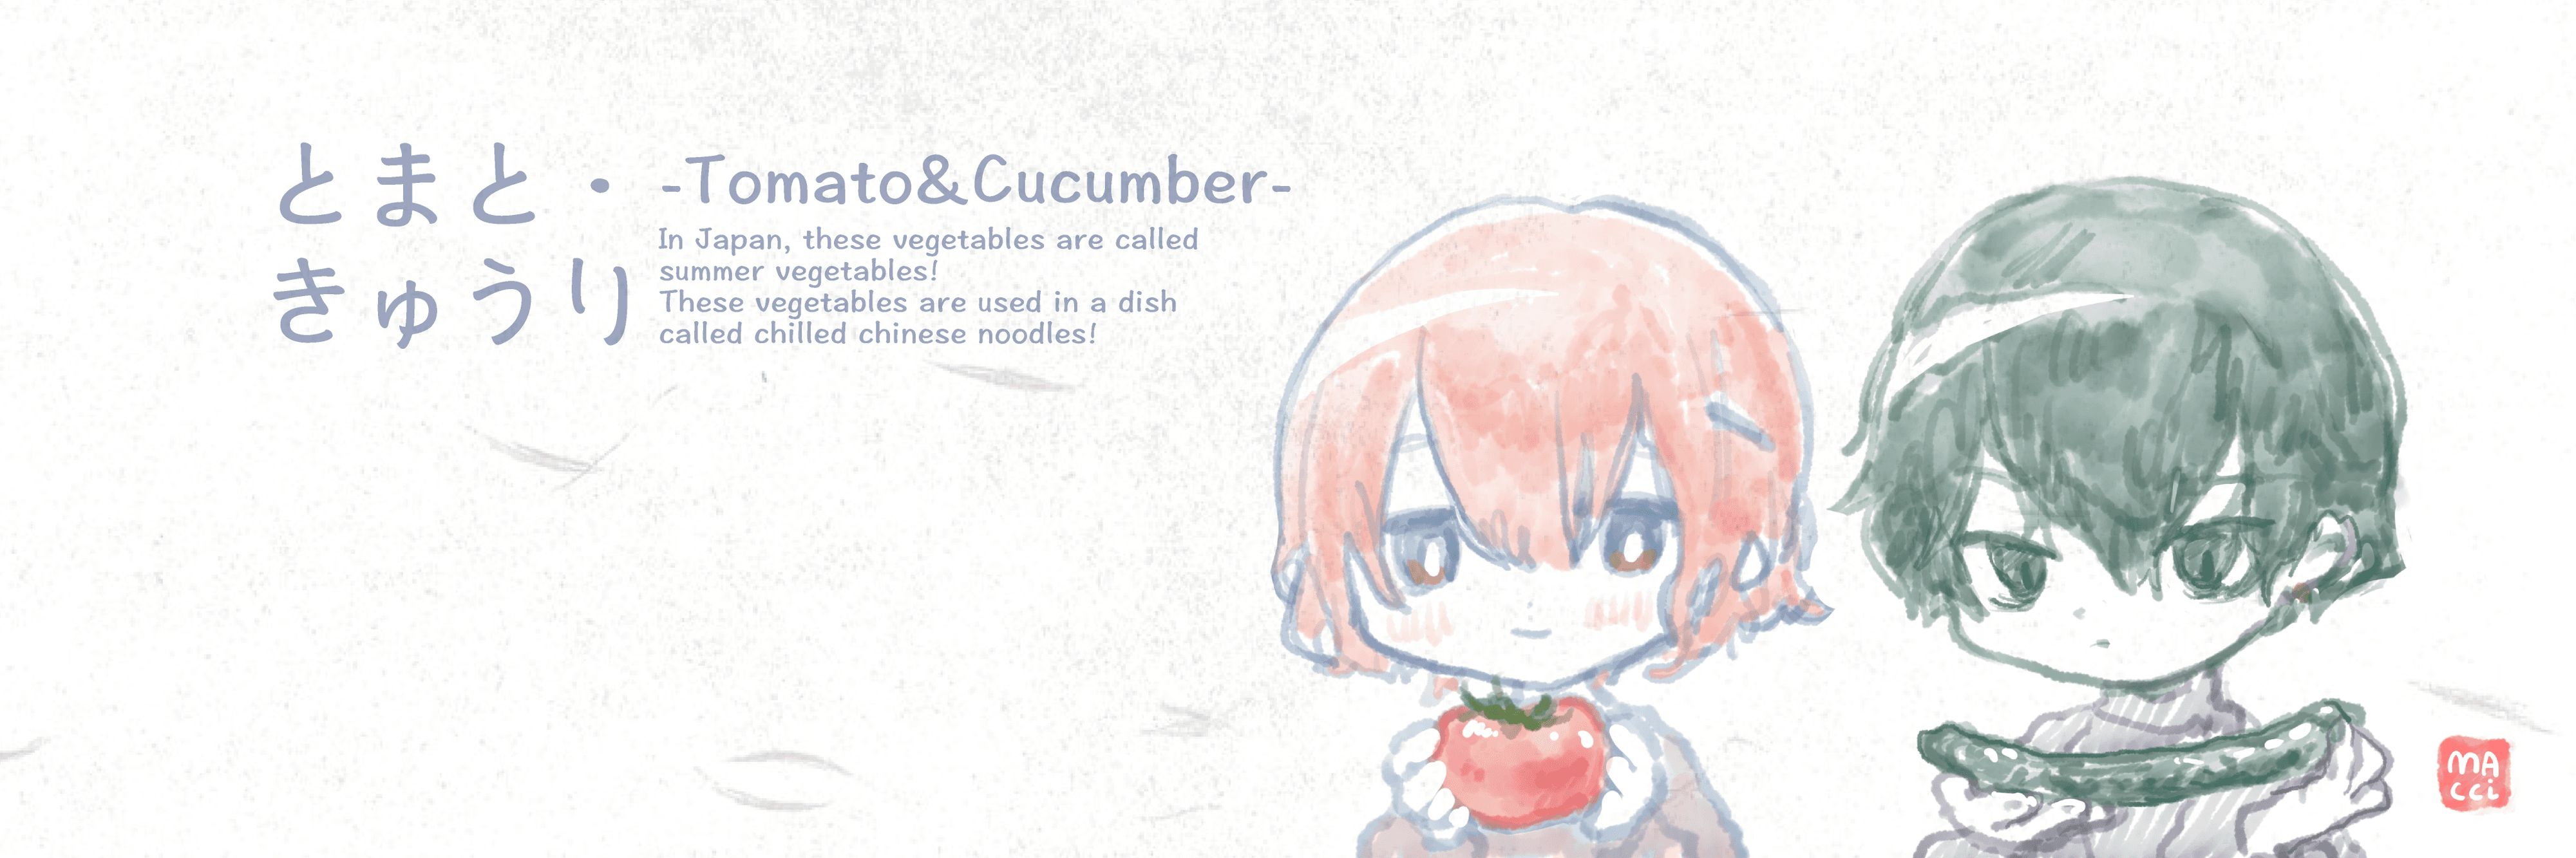 Tomato & Cucumber 220605